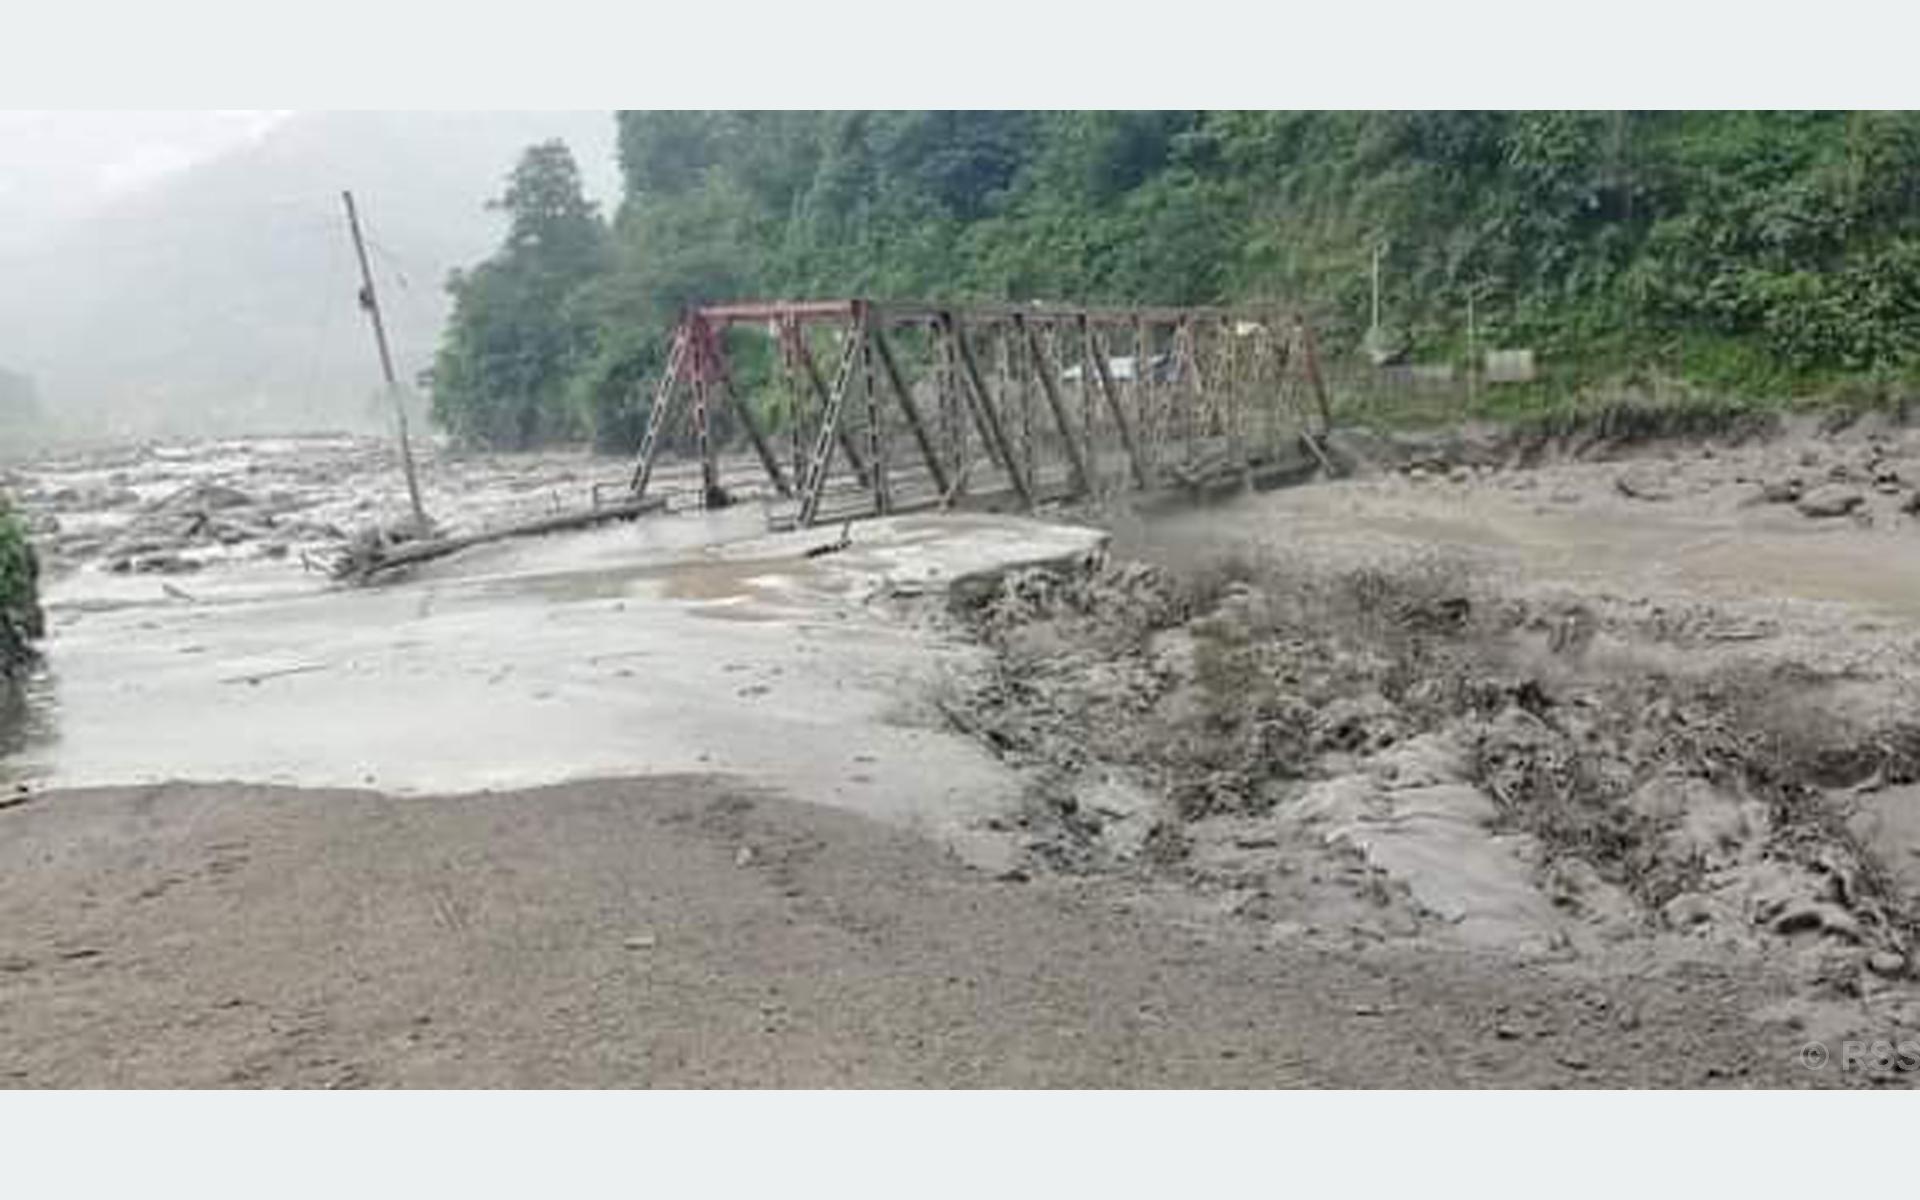 People’s mobility halts after flood sweeps away bridge